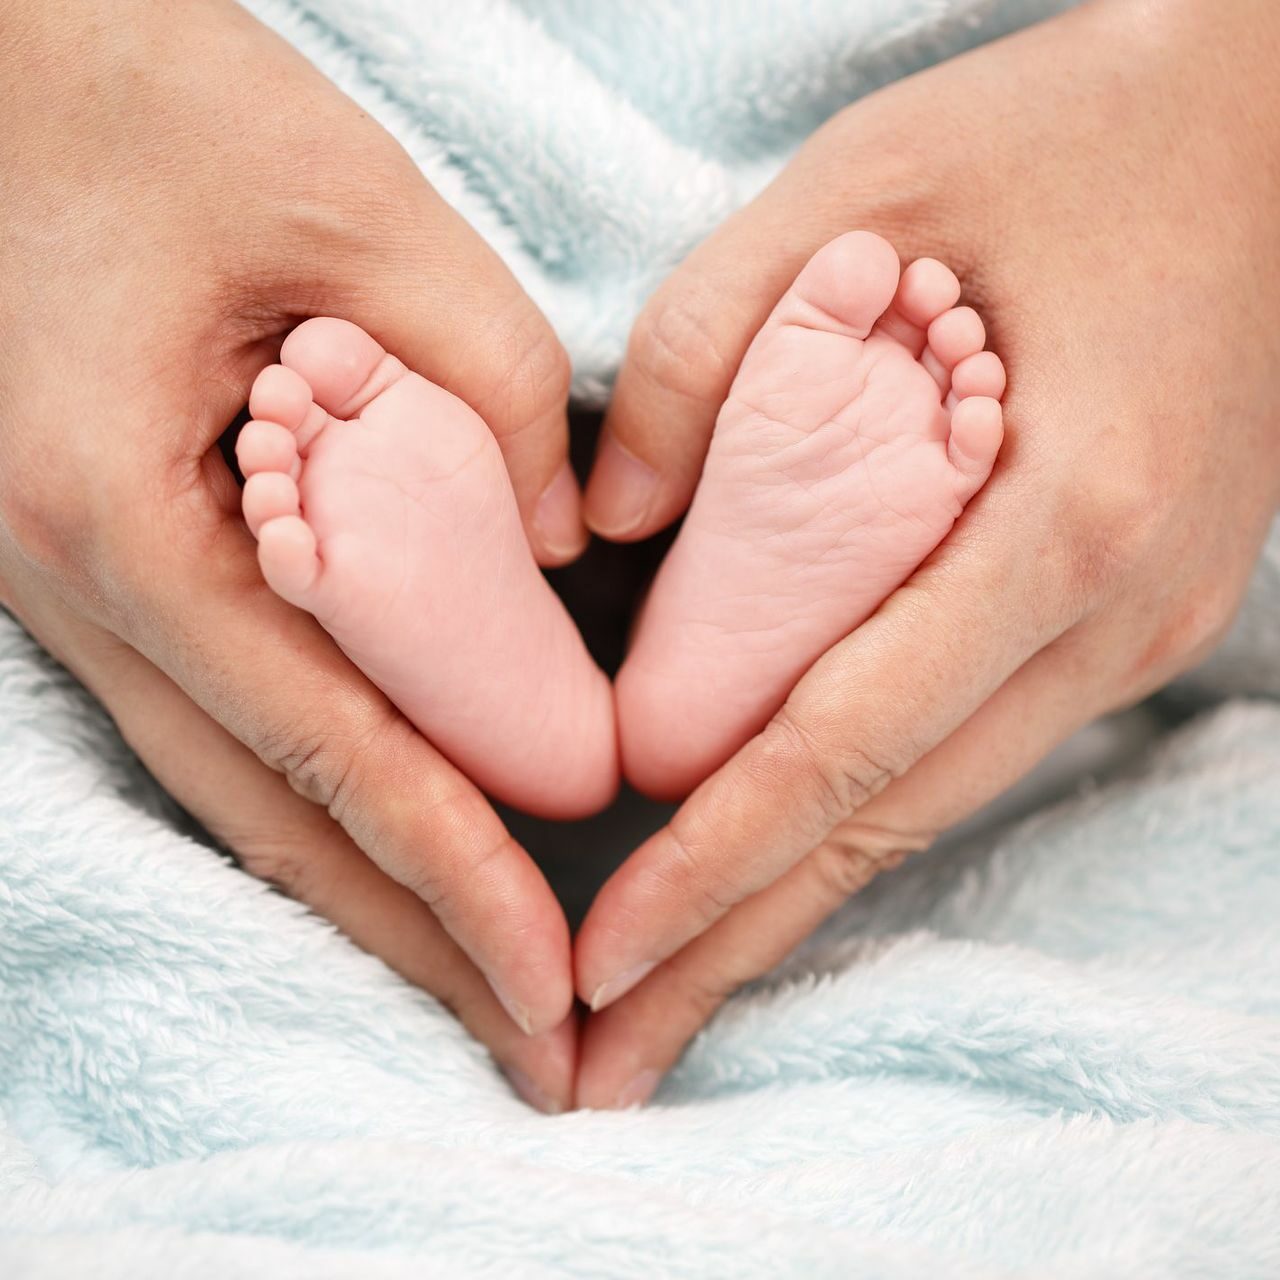 photo-of-newborn-baby-feet-royalty-free-image-15805061261